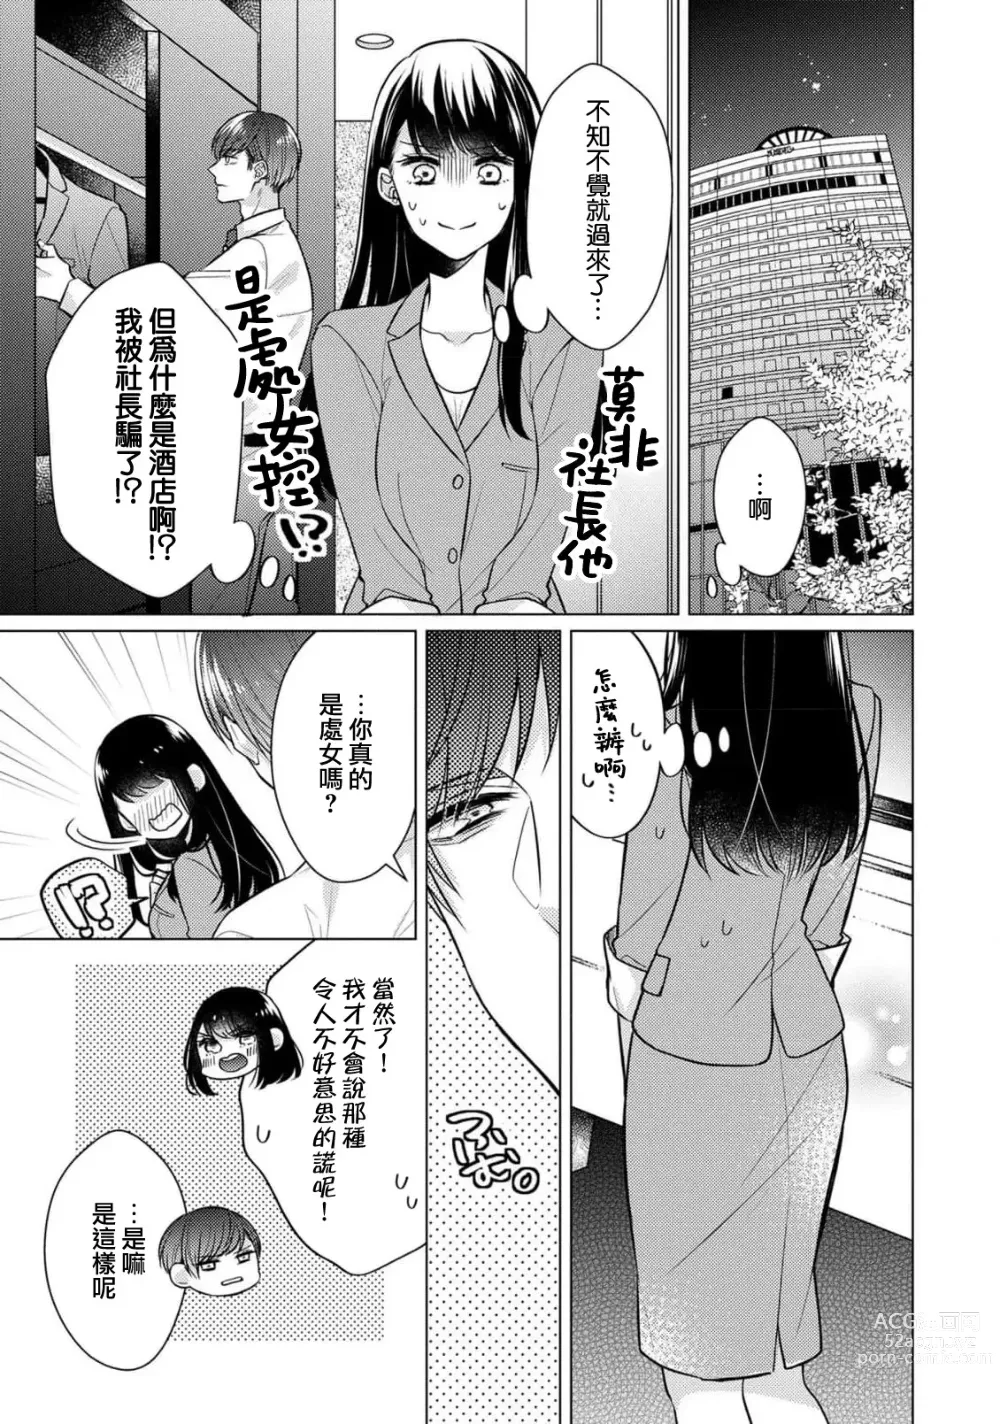 Page 16 of manga 宠爱王子和处女少女~30岁还是处女，这一次和真壁社长签订了炮友契约~ 1-5 end